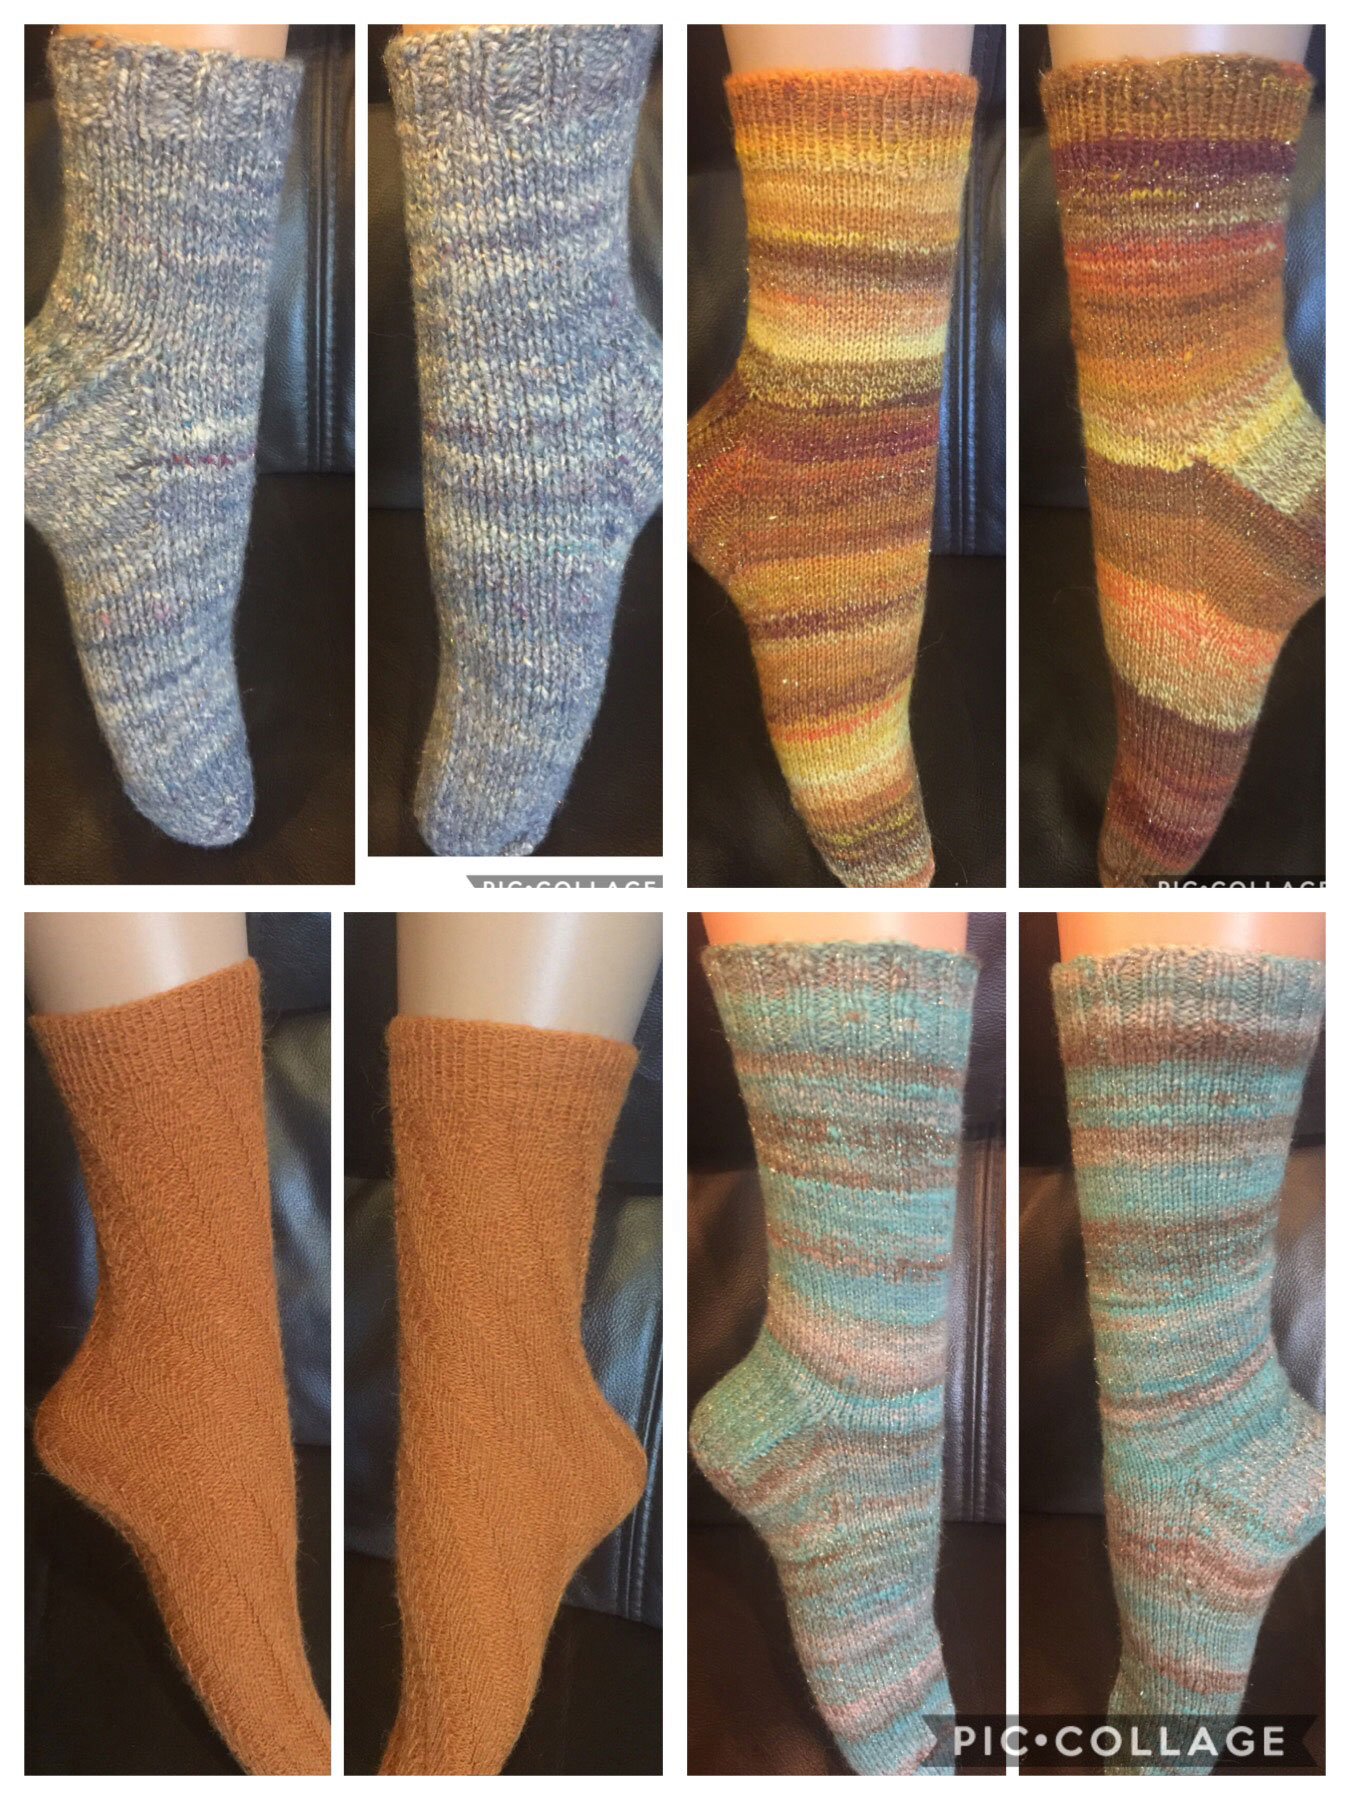 Socks knitted by Heather Sault and winner of SST creative Bursary